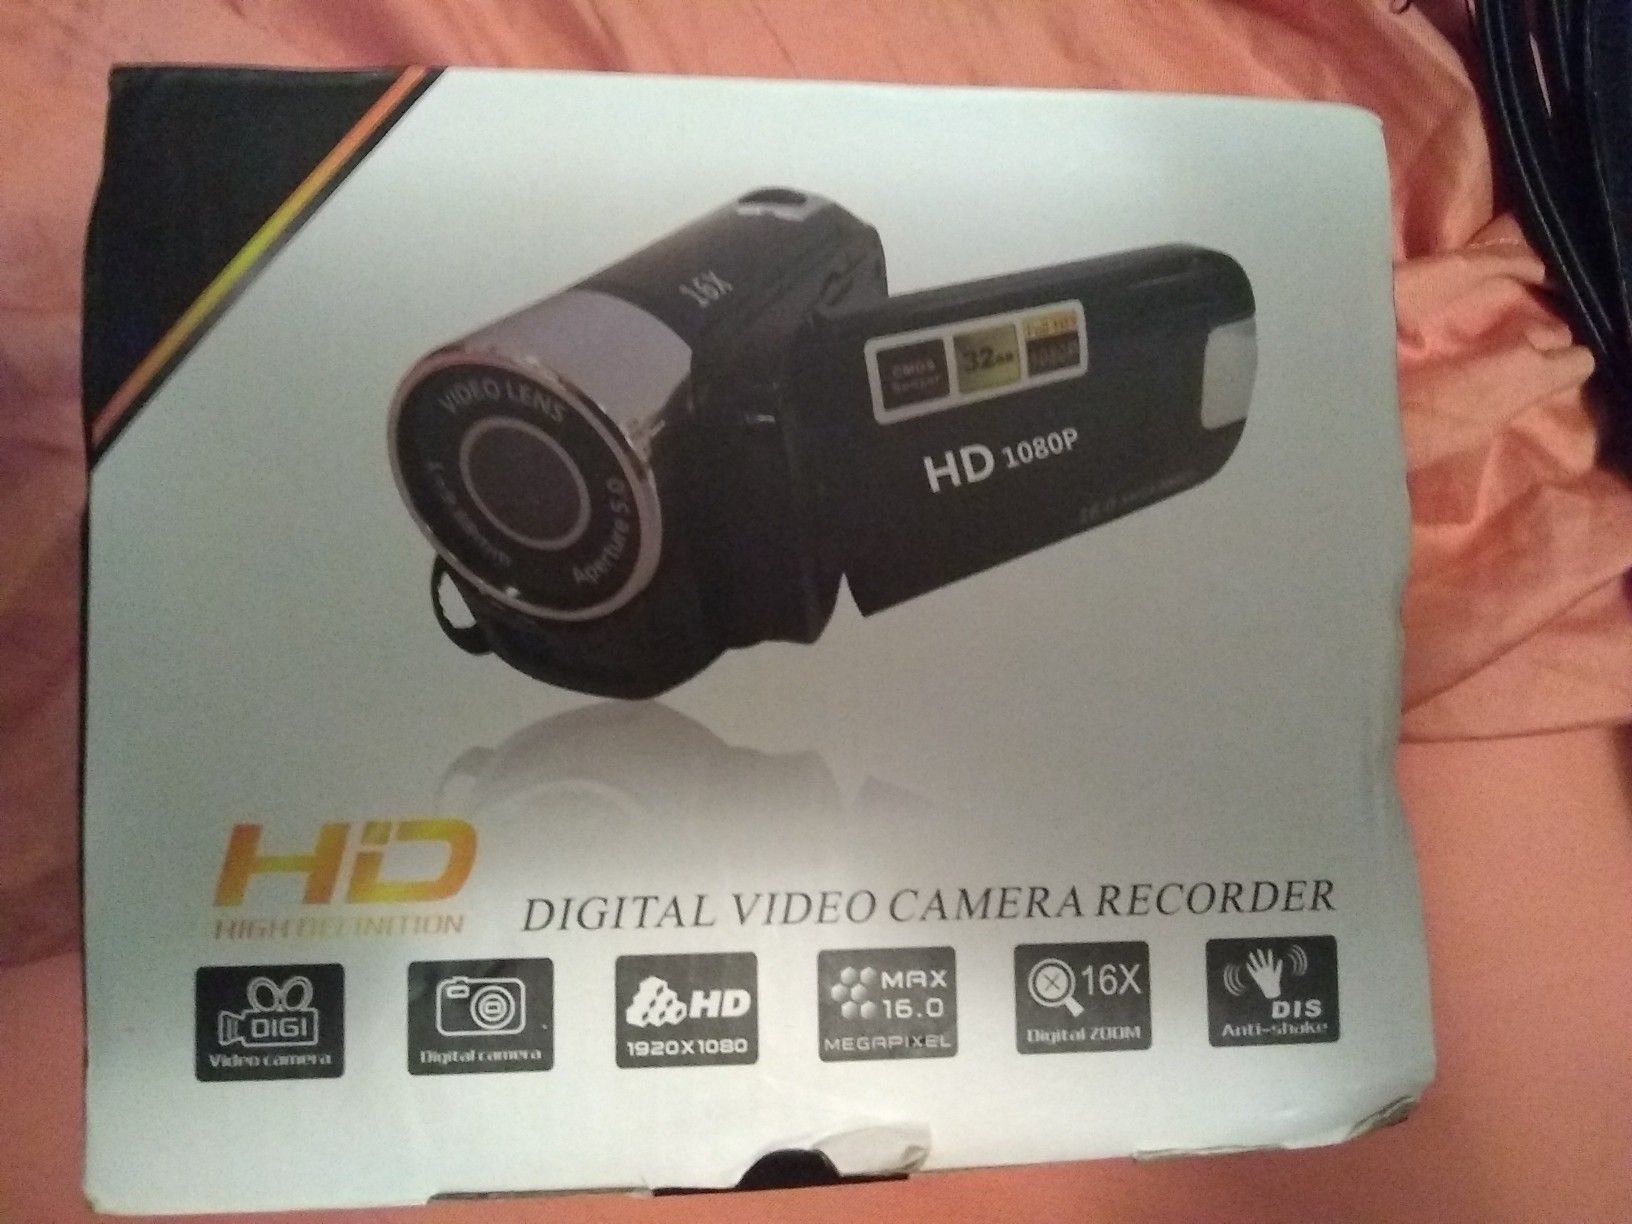 Digital HD video camera recorder